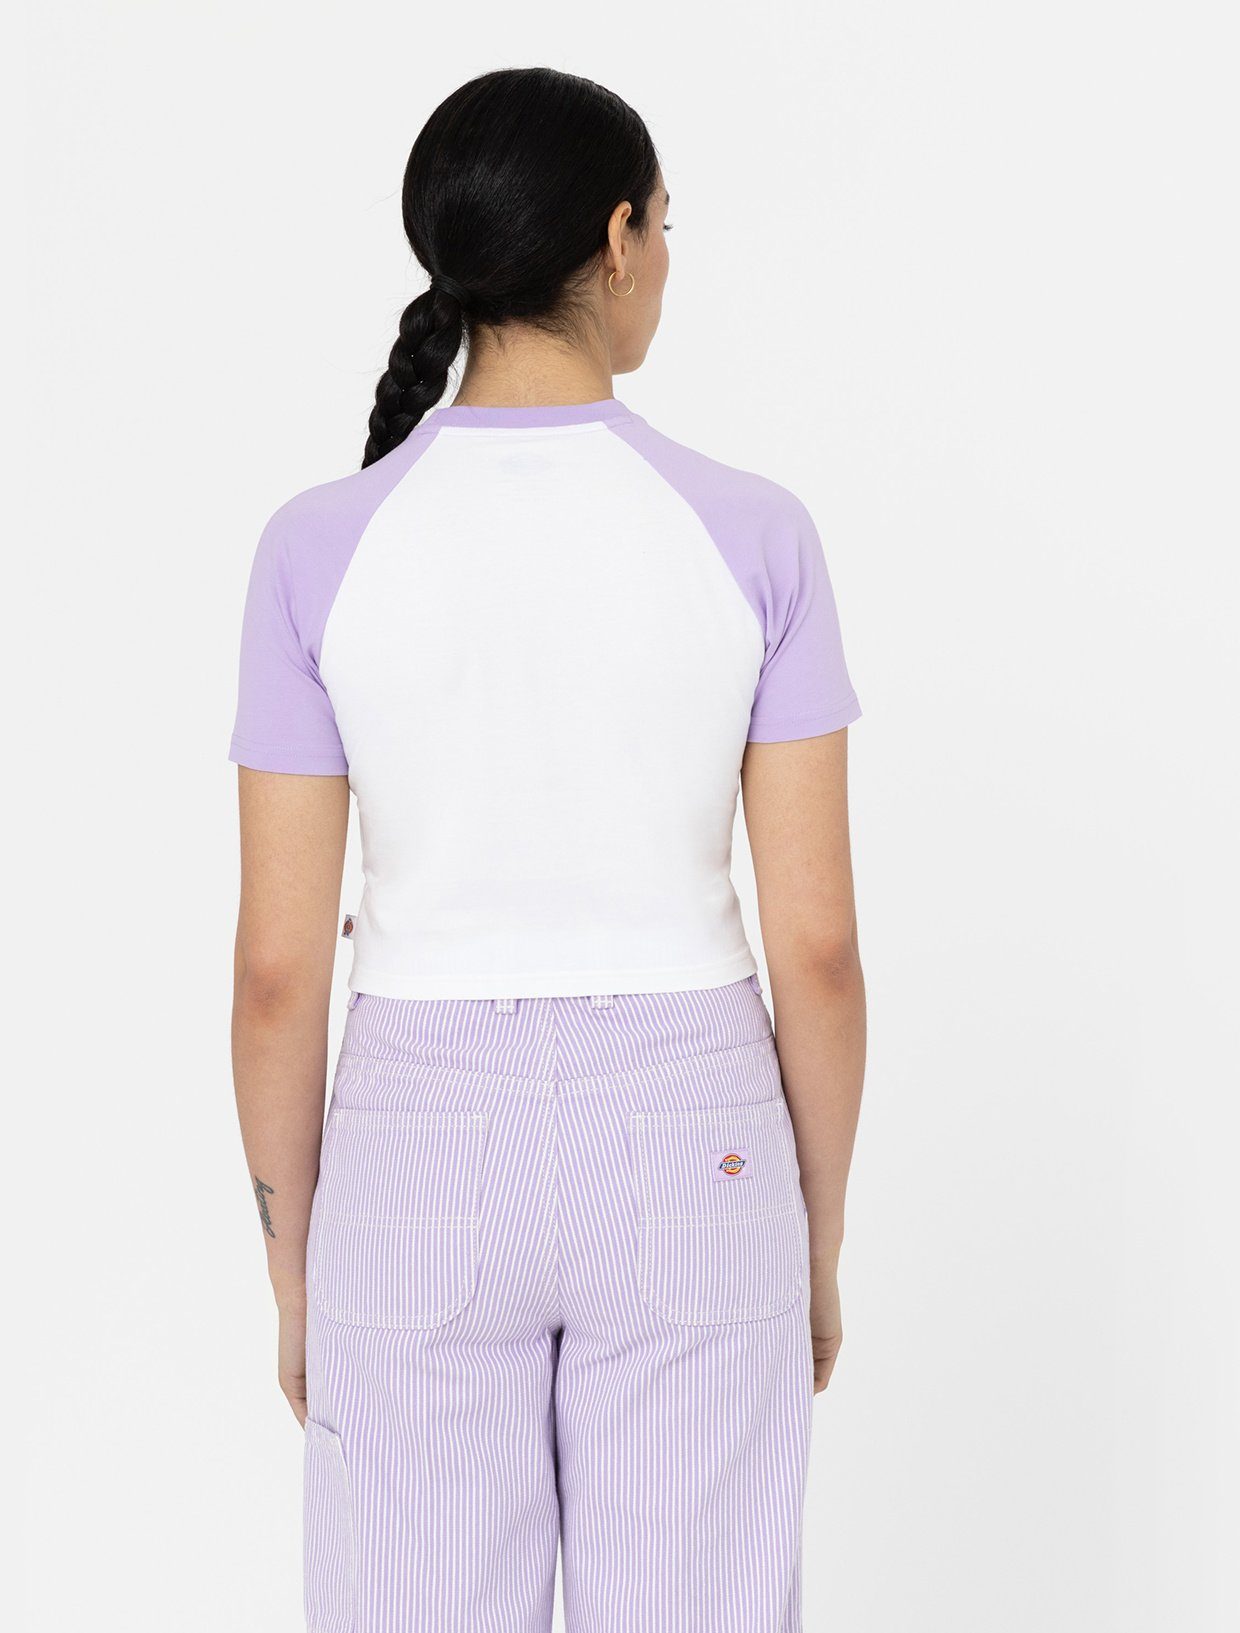 Sodaville Damen Dickies Dickies T-Shirt T-Shirt rose purple Adult